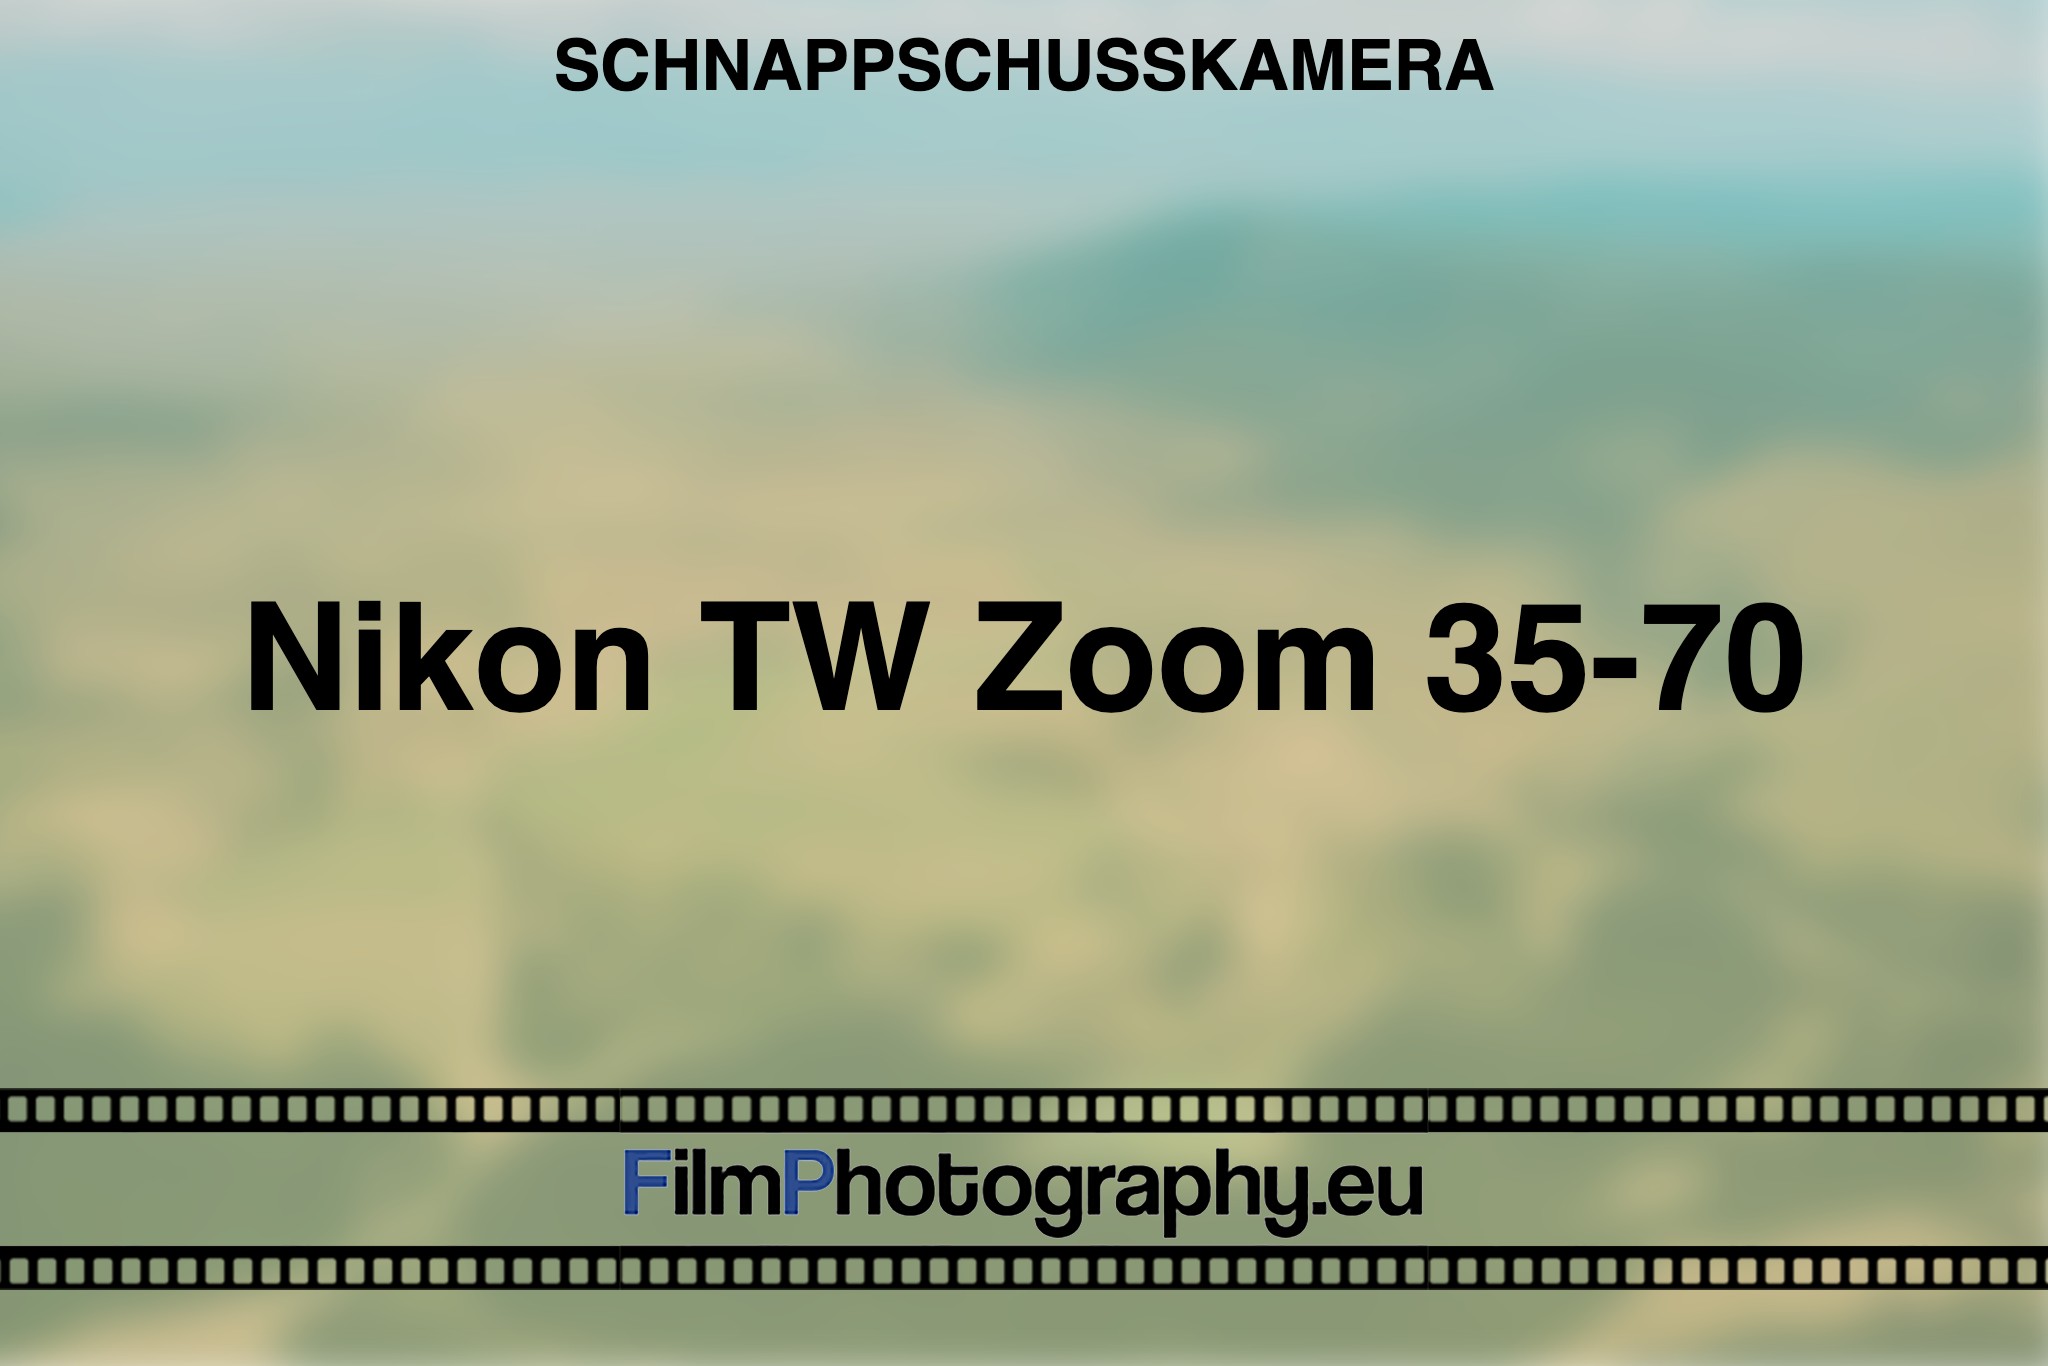 nikon-tw-zoom-35-70-schnappschusskamera-bnv